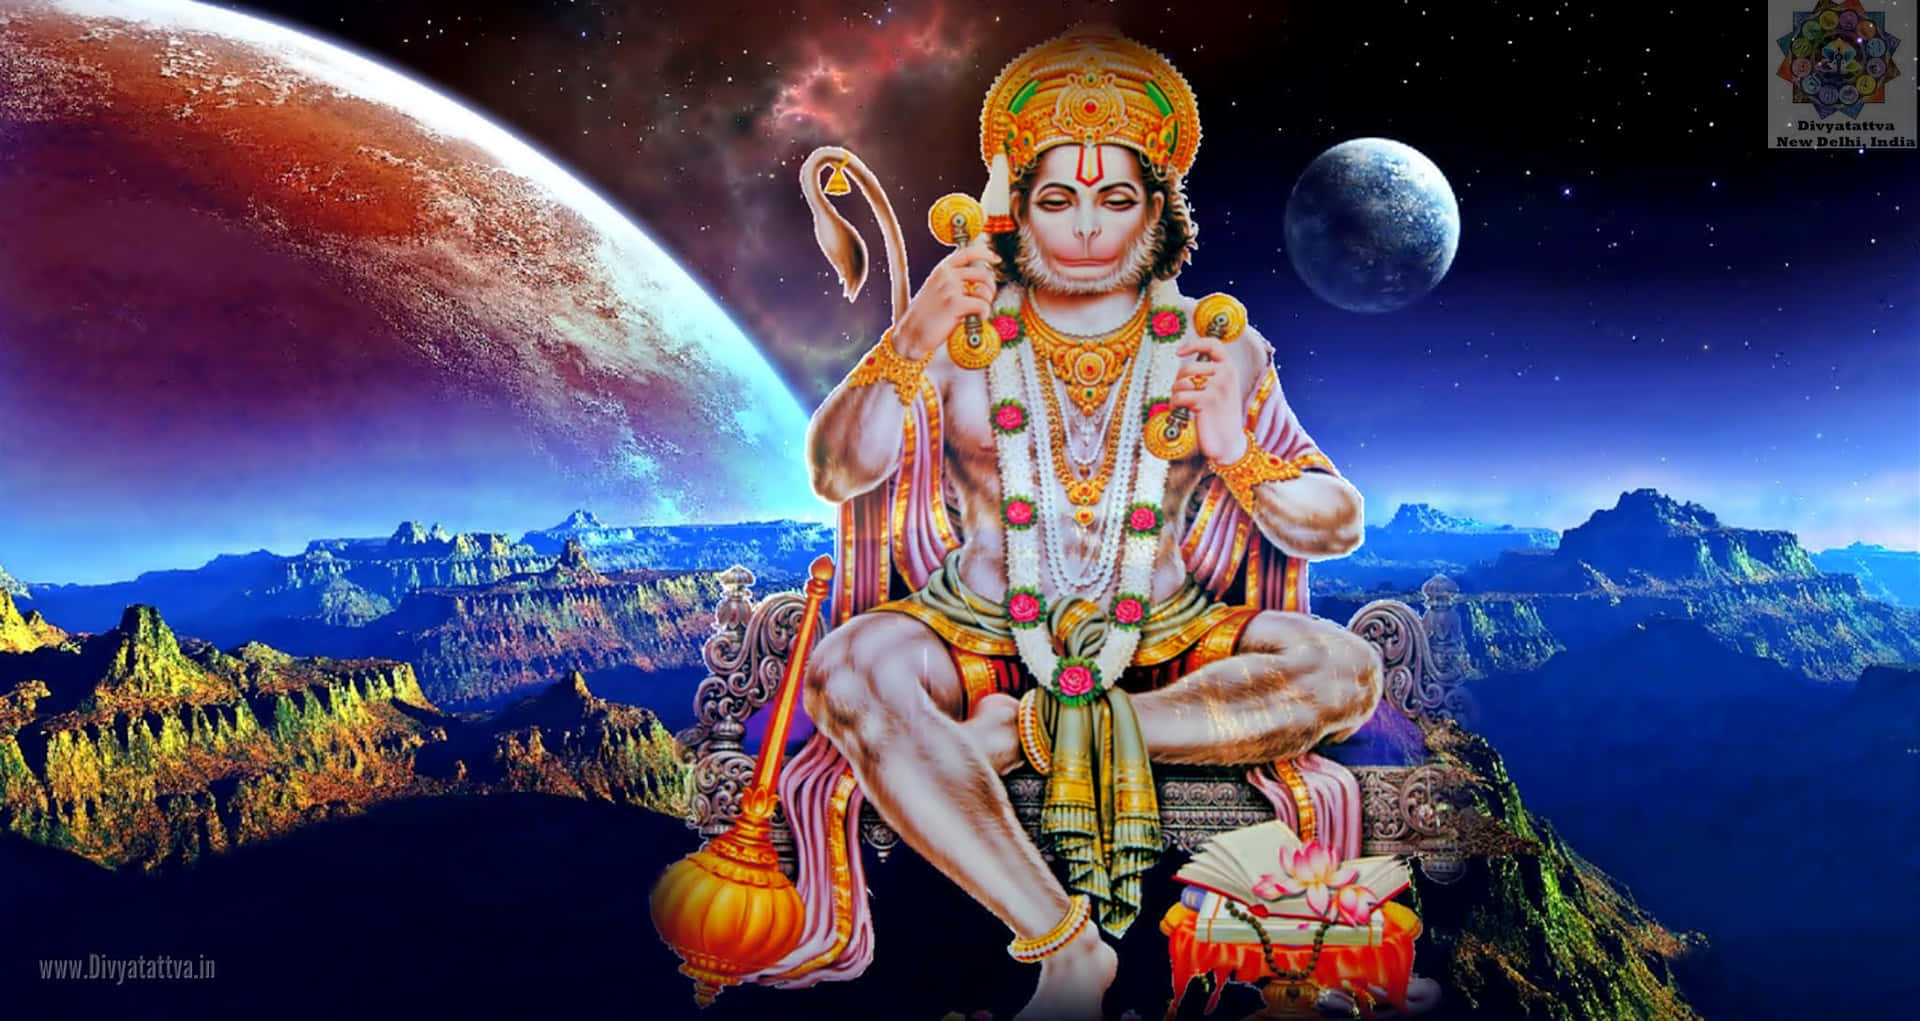 Call on Lord Hanuman - The Ever-Loyal Lord